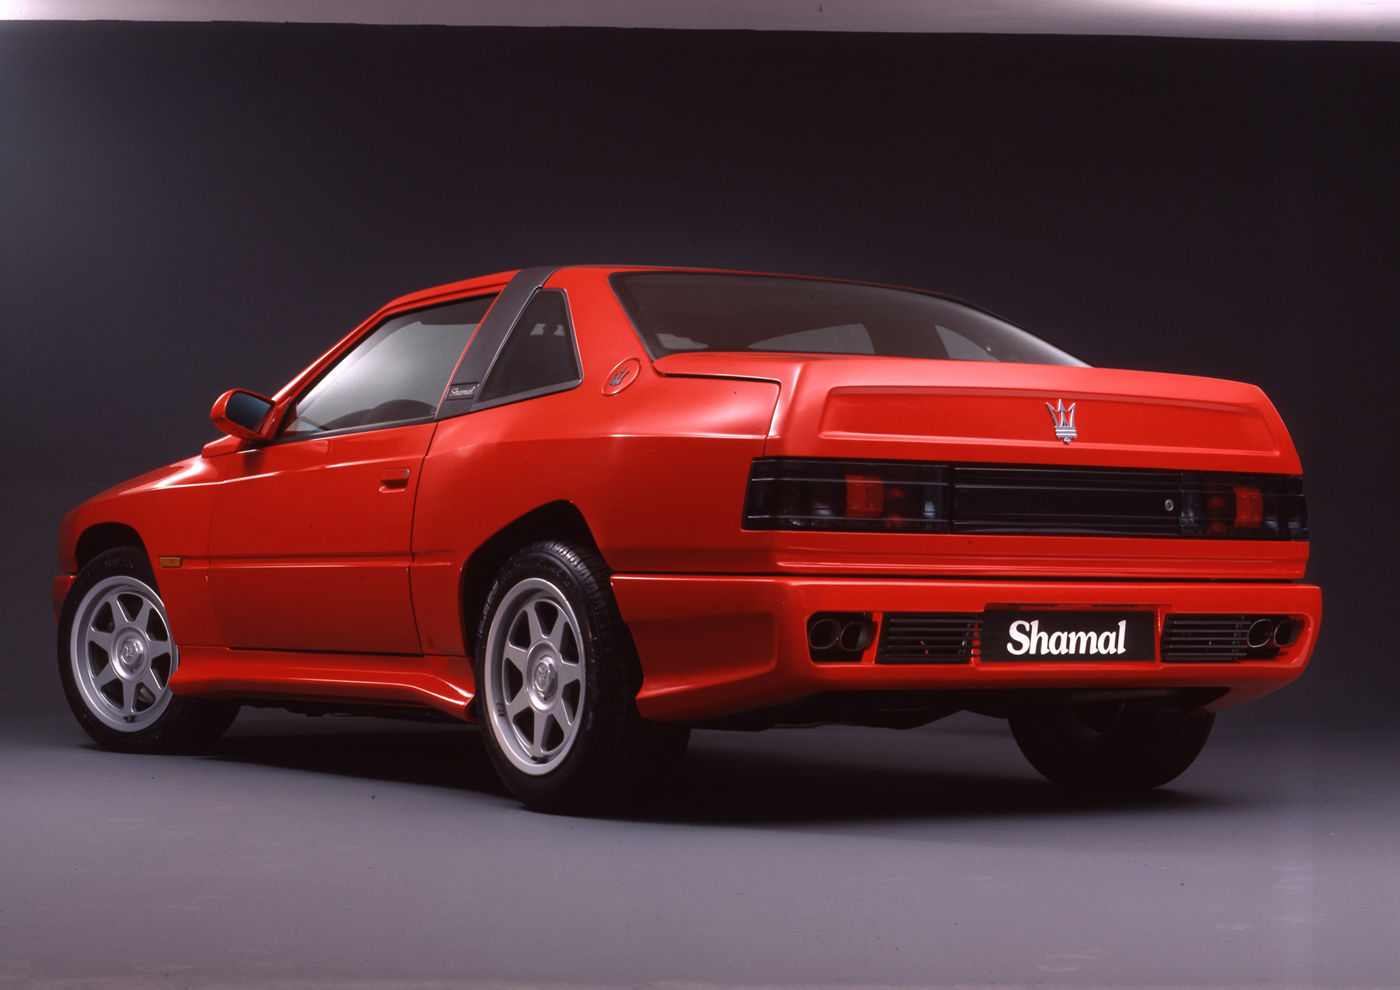 1990 Maserati Shamal - Biturbo - classic sports car model in red